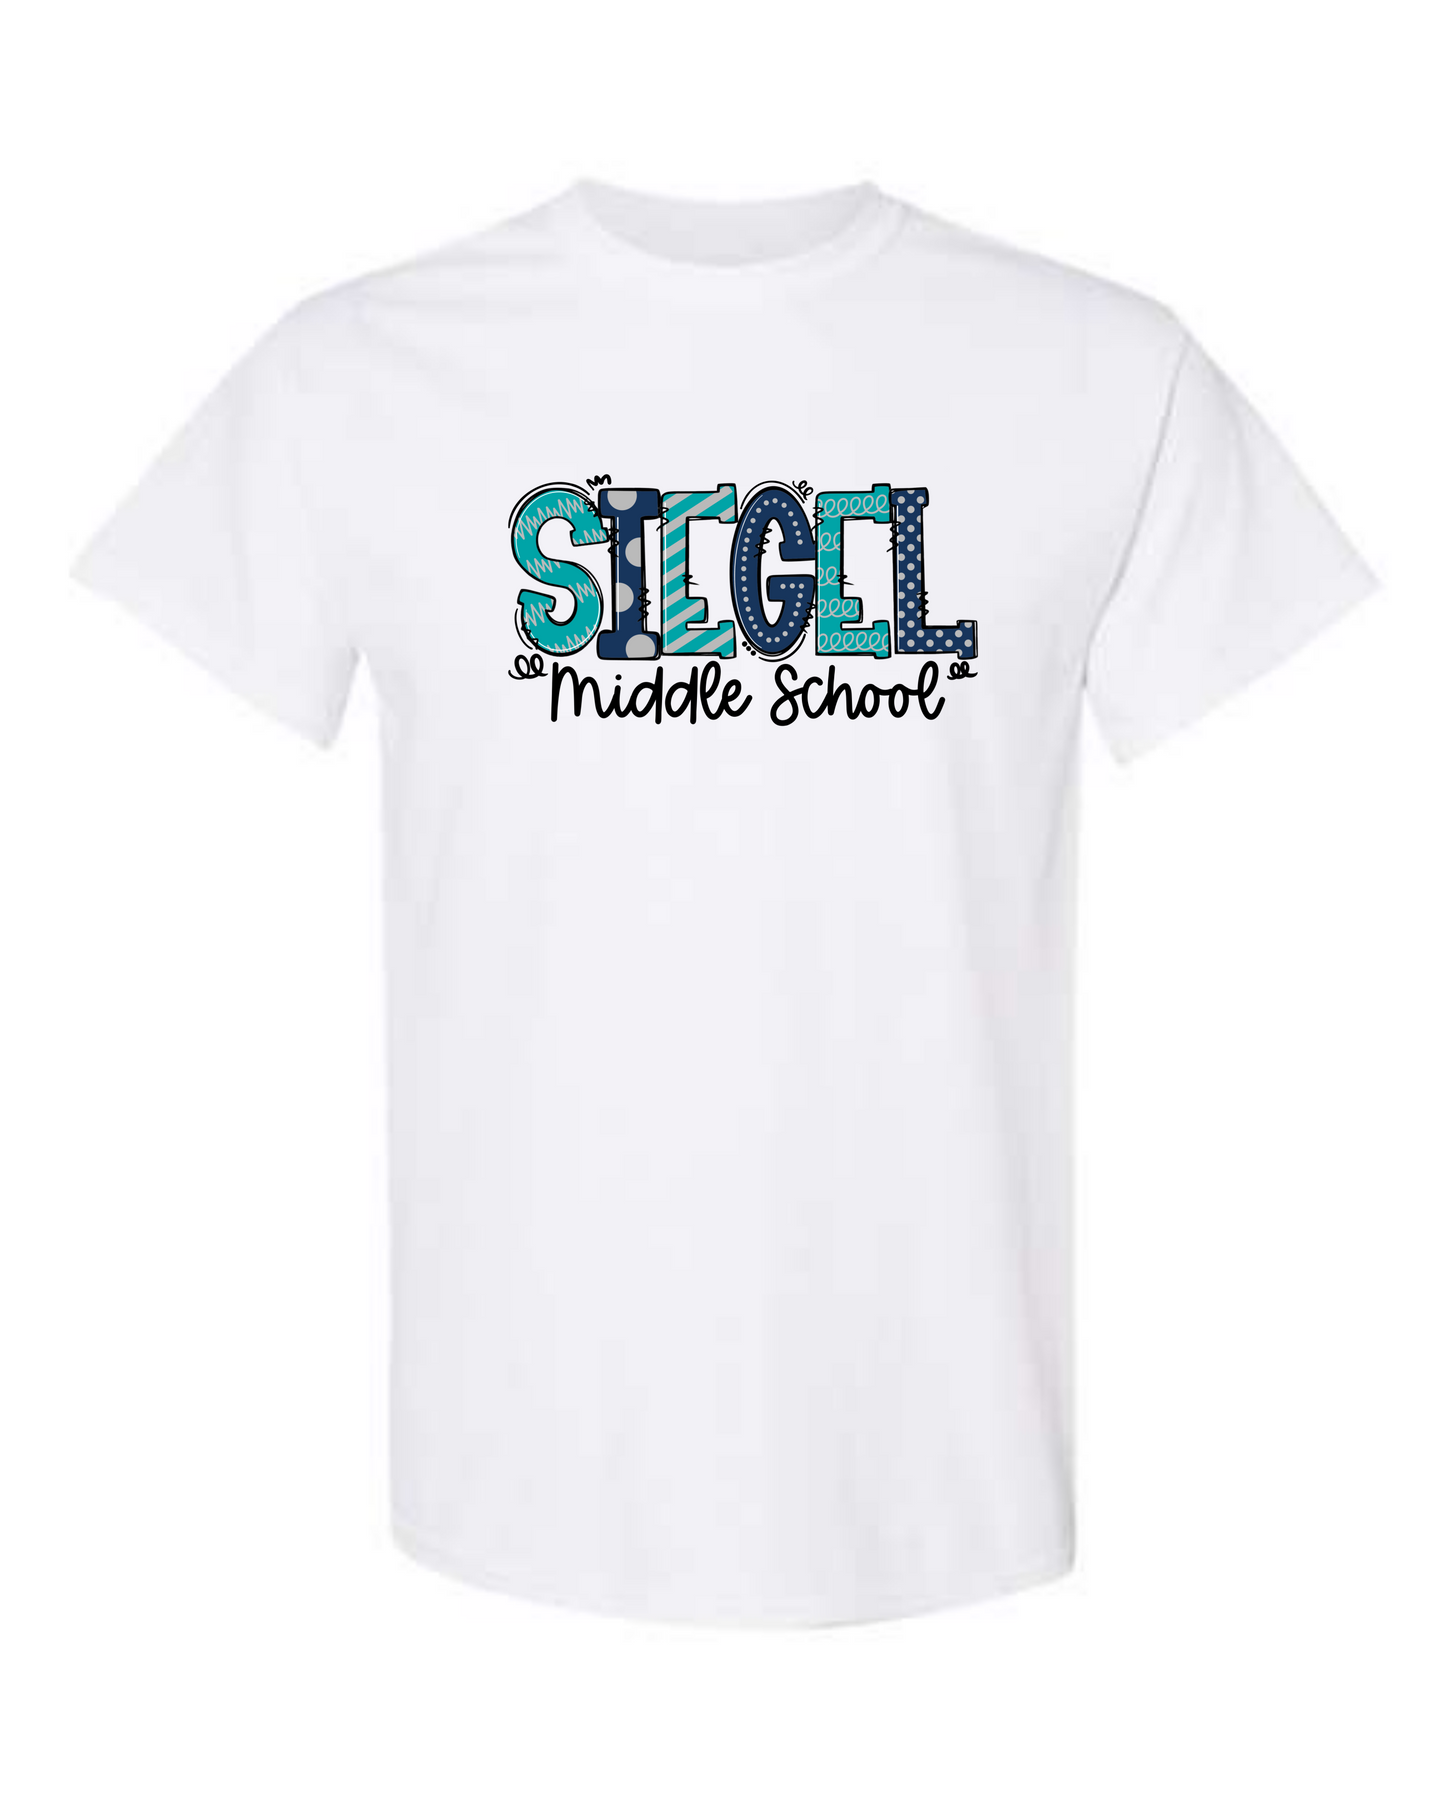 Siegel Middle School Doodle Design Tshirt